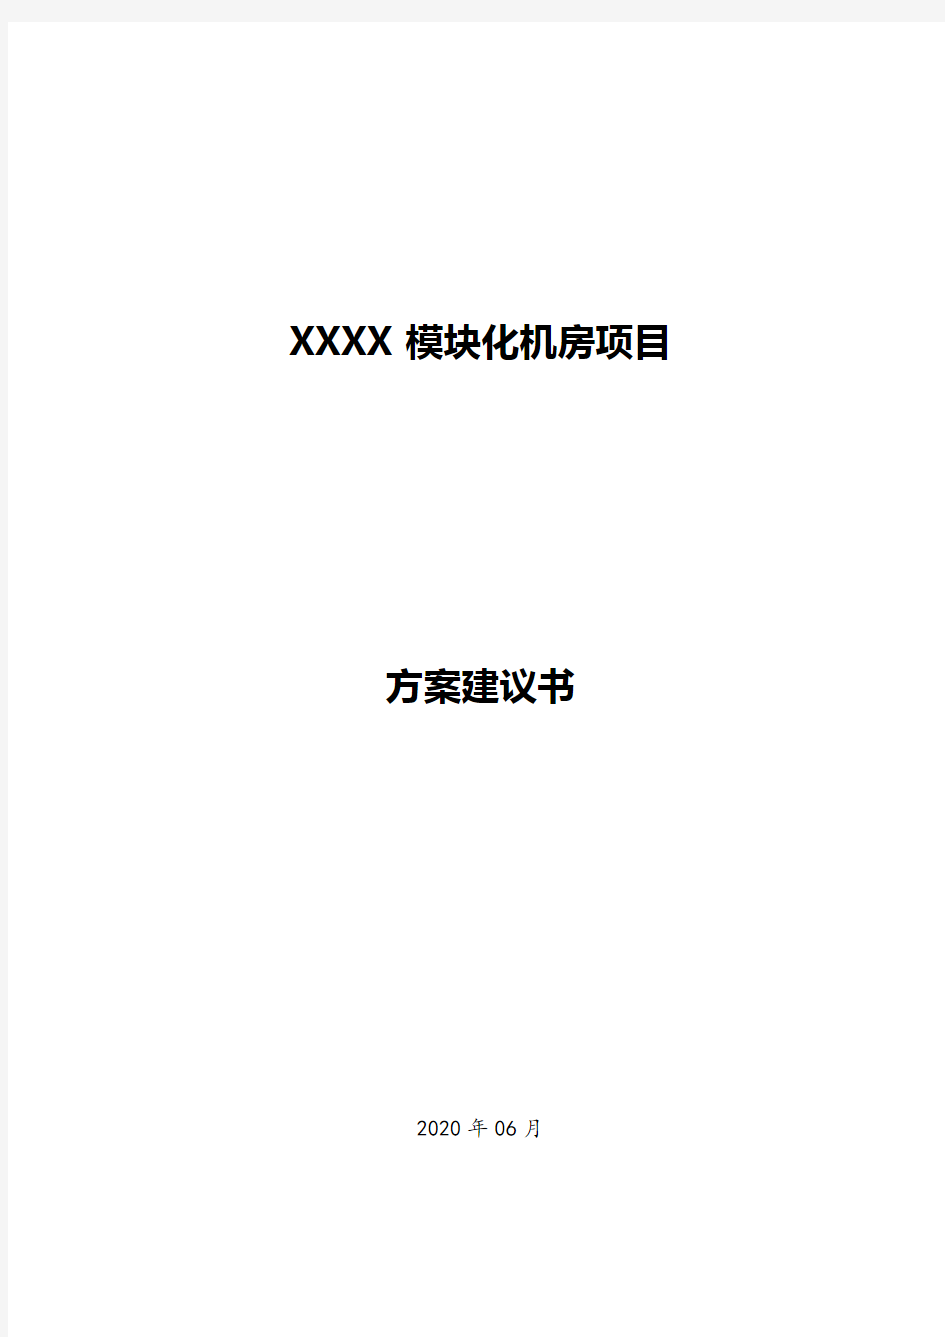 XXXX模块化机房项目方案建议书